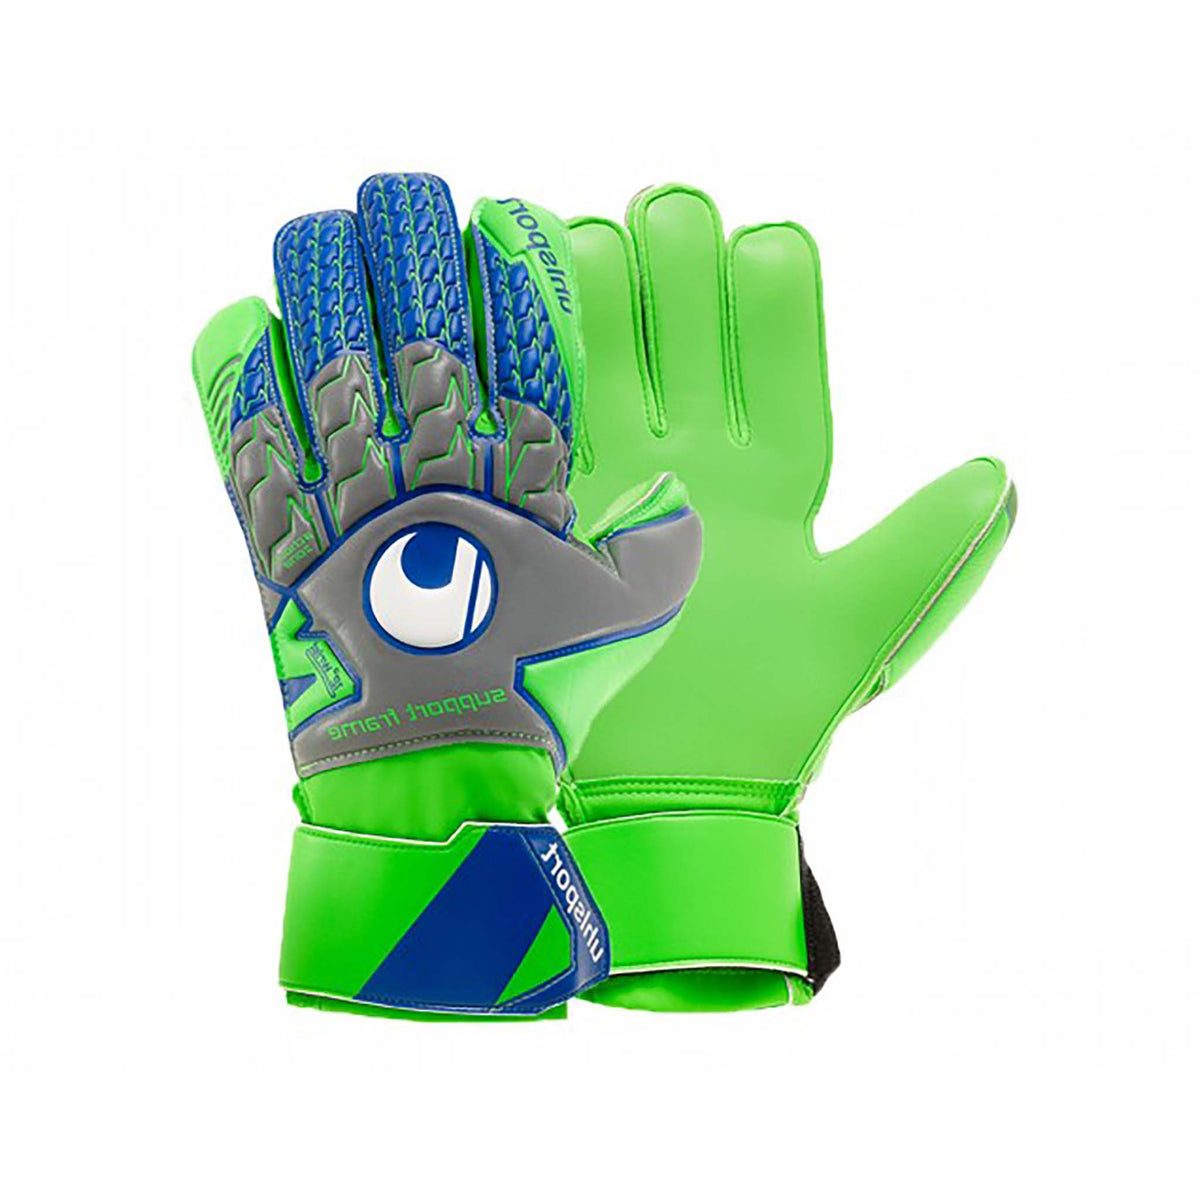 Uhlsport Tensiongreen Soft SF gants de gardien de soccer junior paire